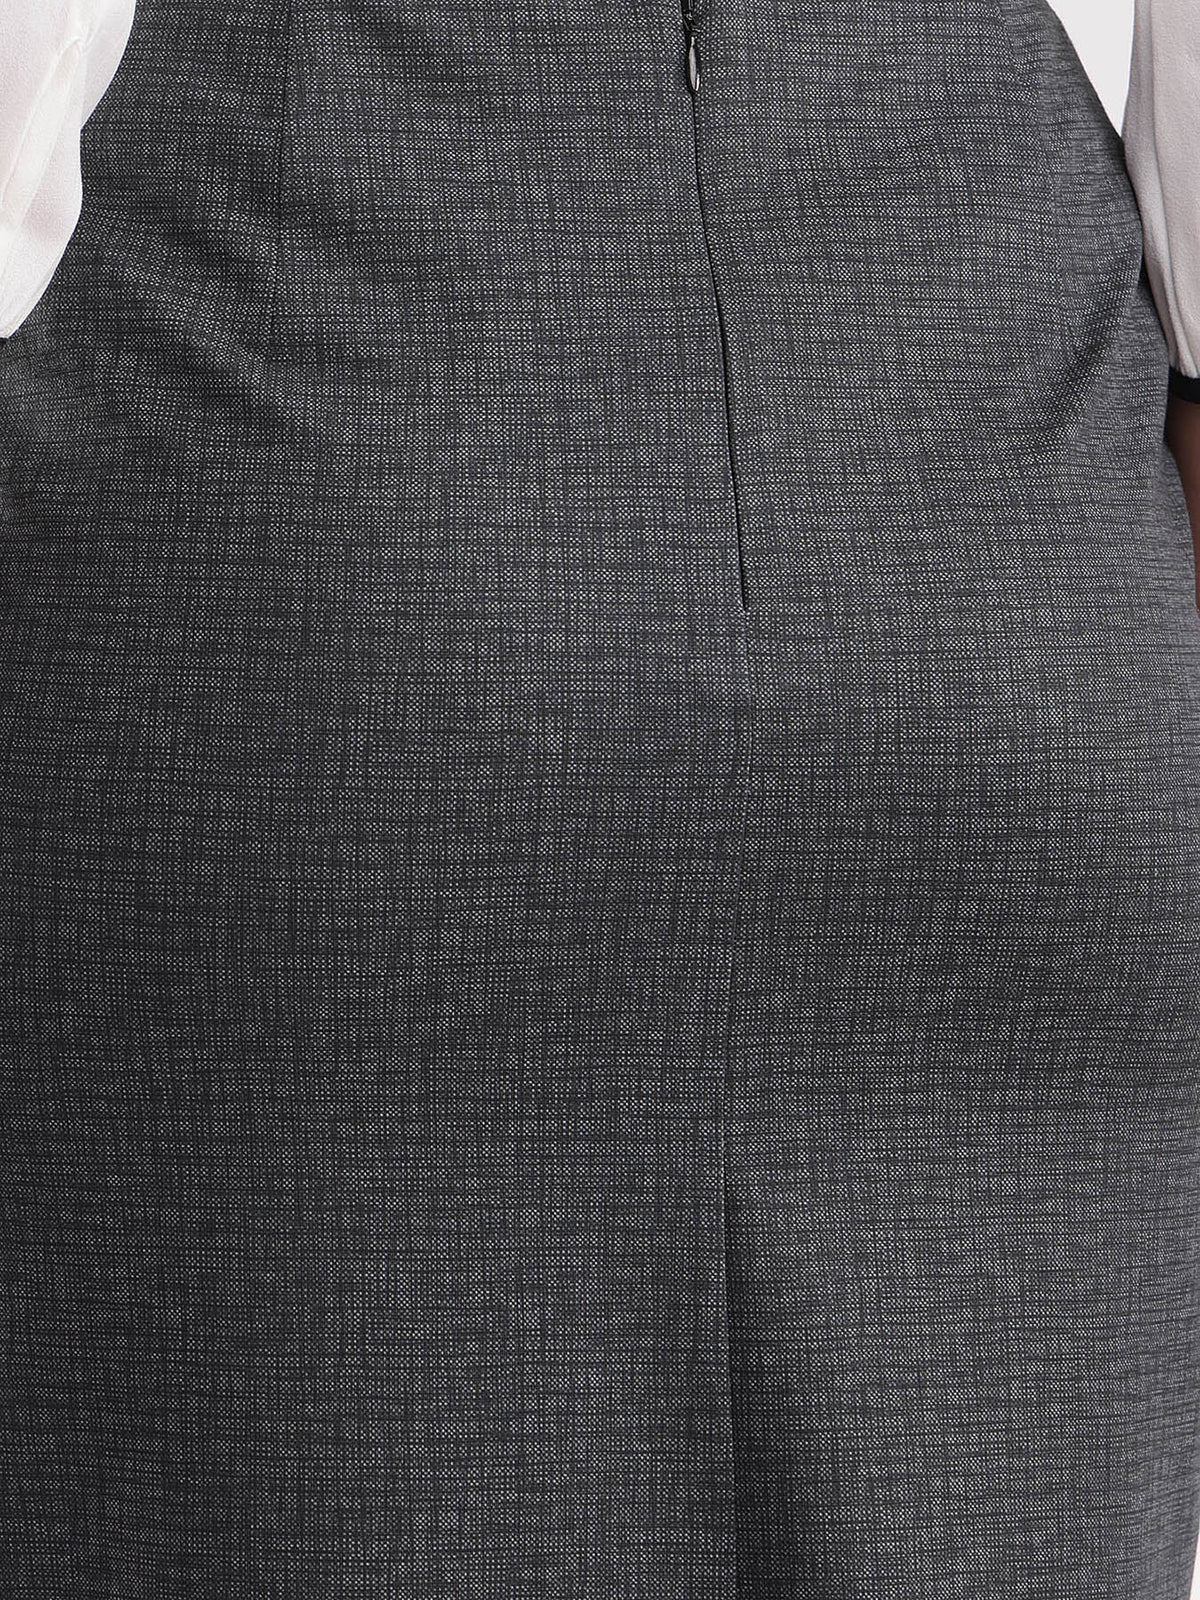 Stretchable Pencil Skirt - Grey